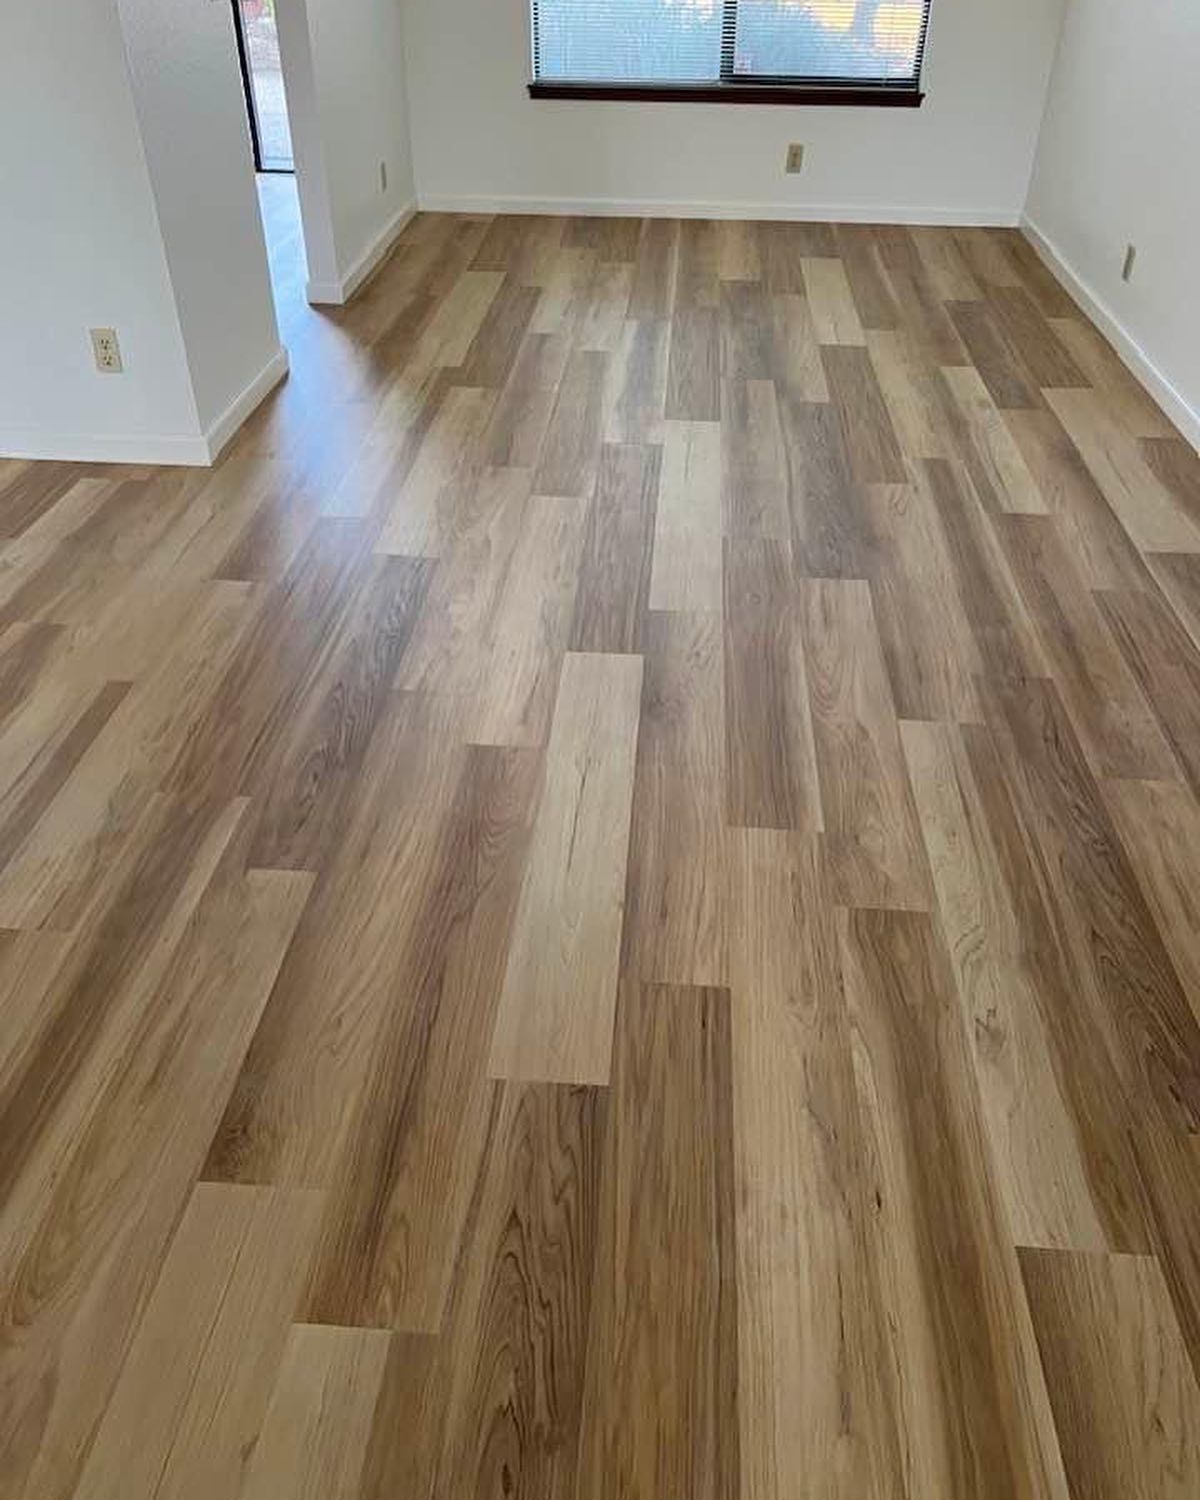 Solid Hardwood Flooring installation in Livermore, CA